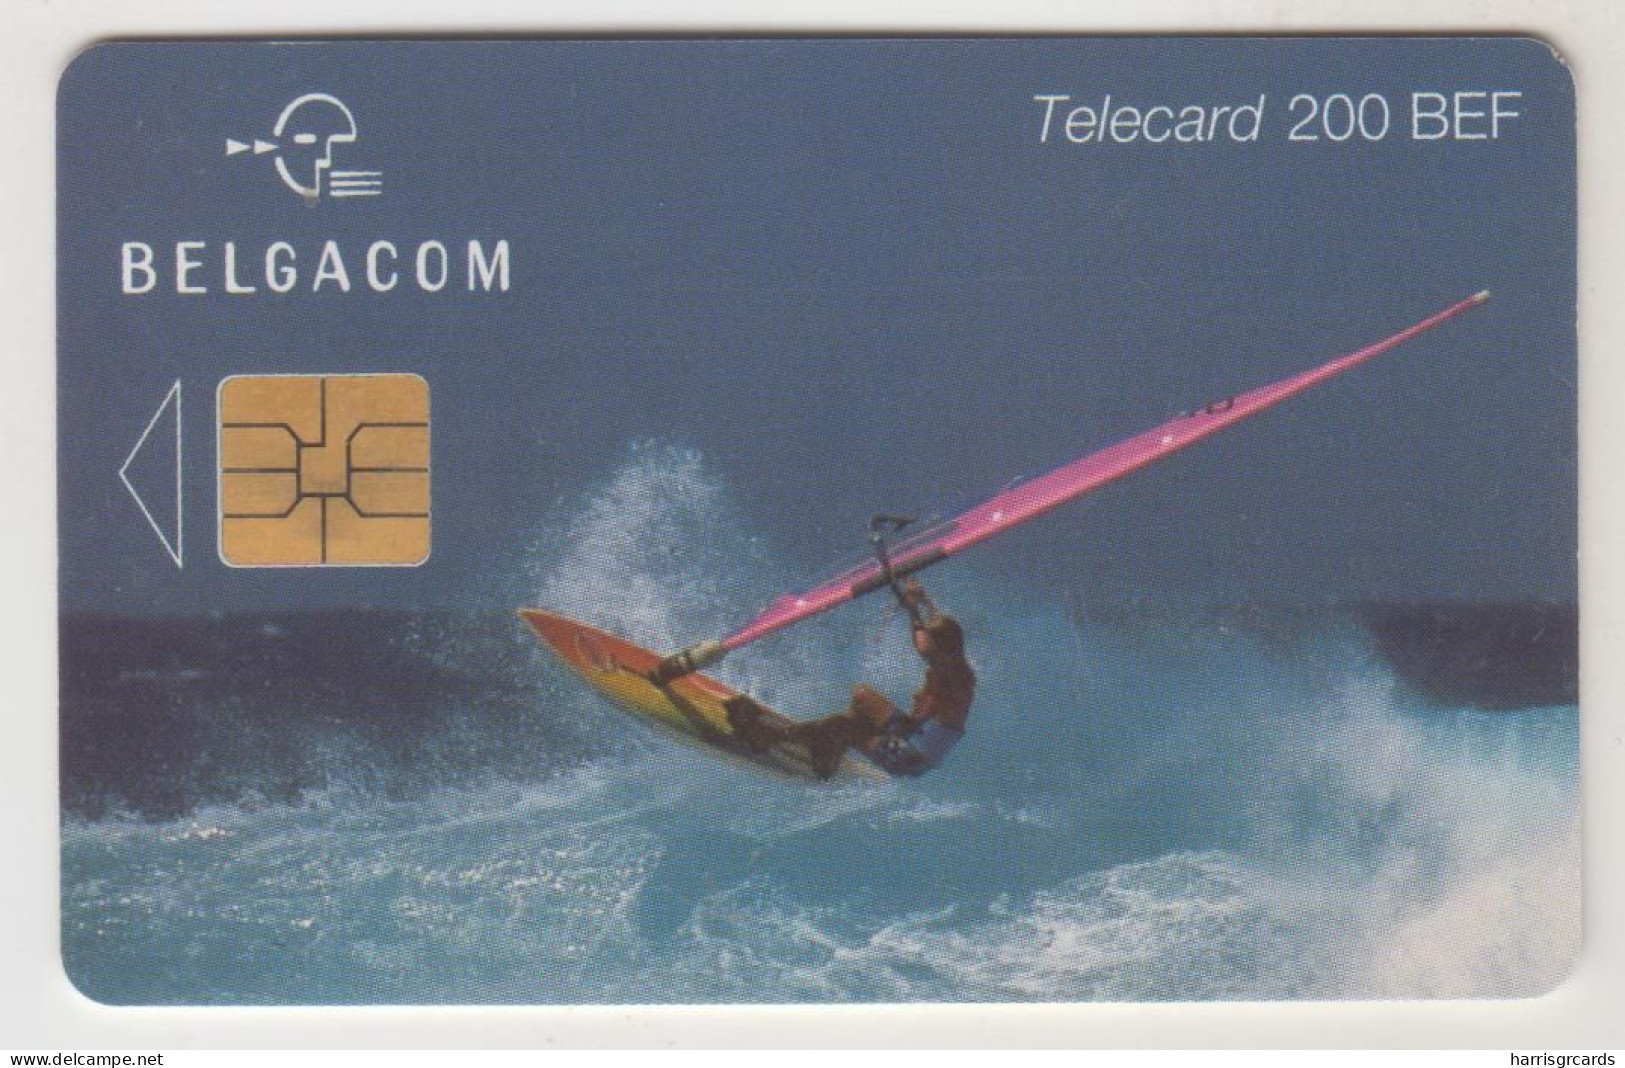 BELGIUM - Surfer, 200 BEF, Tirage 150.000, Used - Met Chip